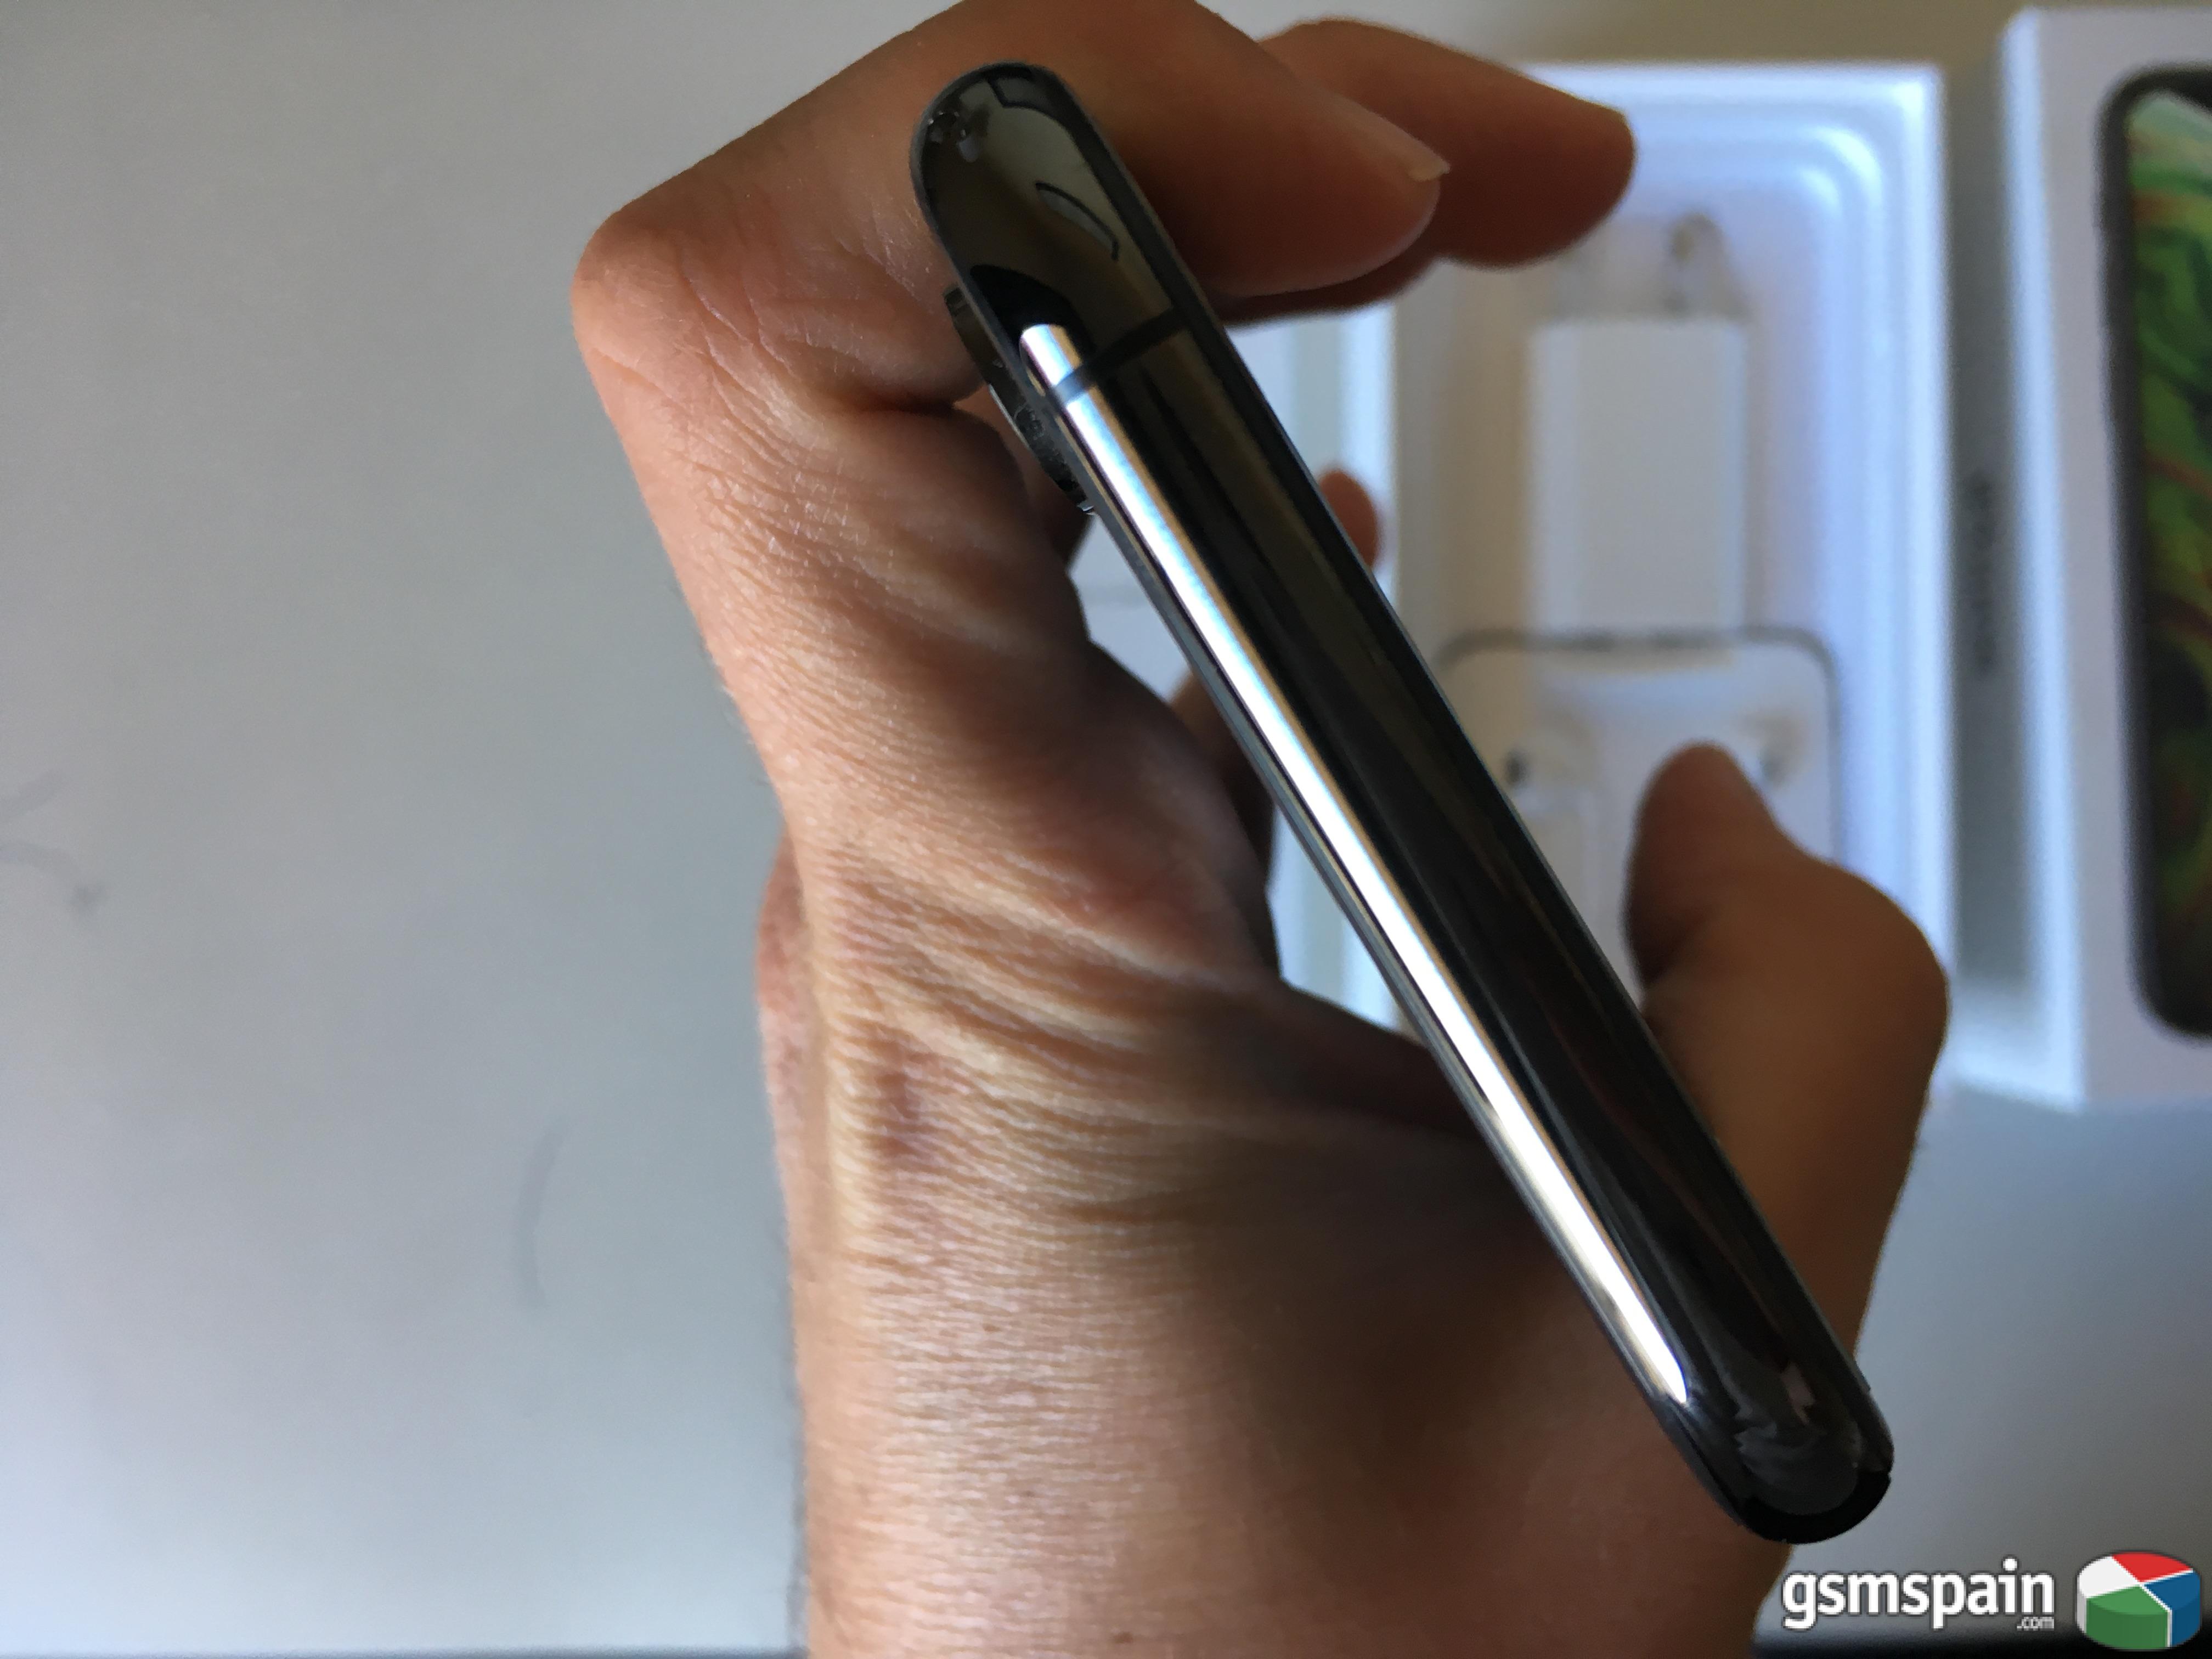 [VENDO] iPhone XS Space Grey 64GB impoluto con accesorios a estrenar